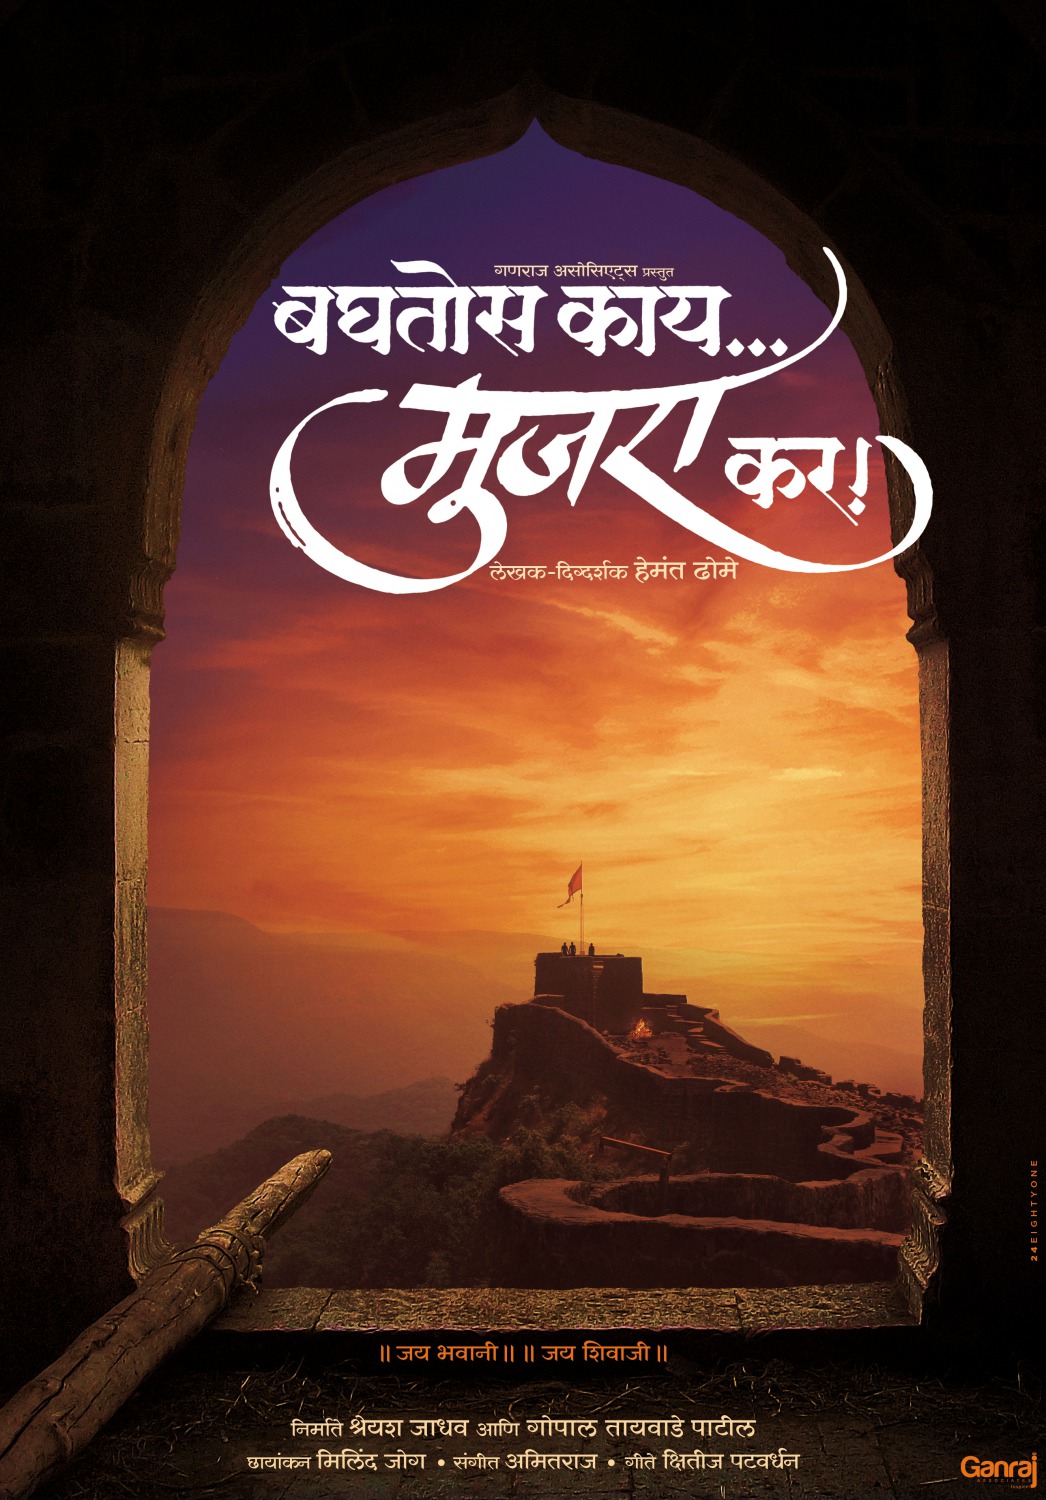 Extra Large Movie Poster Image for Baghtos Kay Mujra Kar 